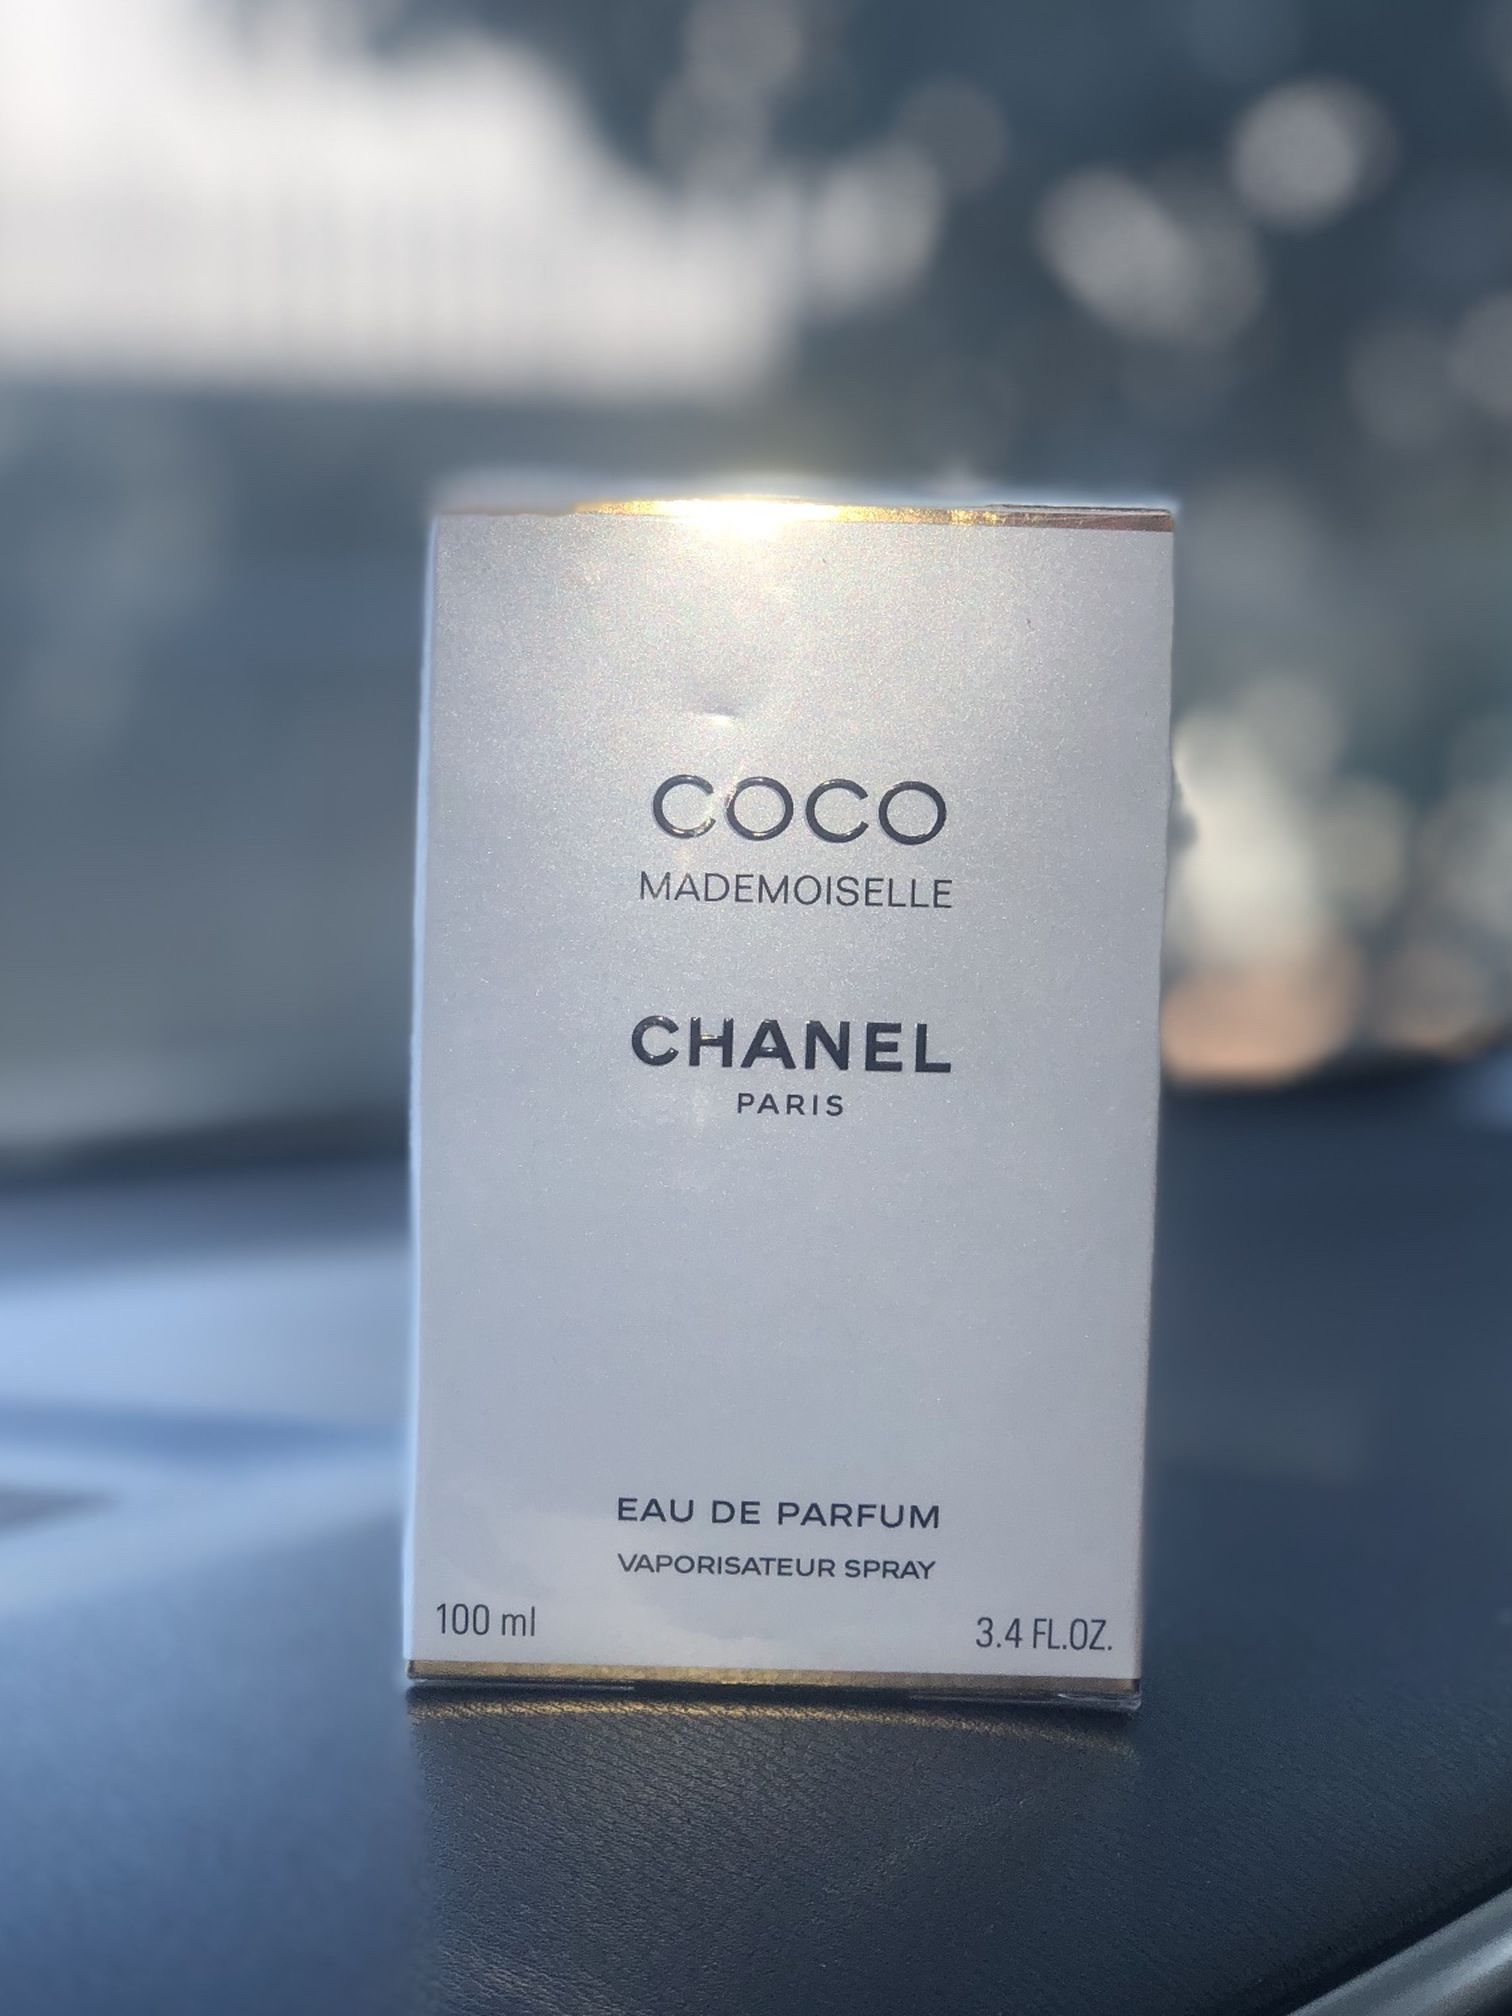 Chanel Coco mademoiselle perfume